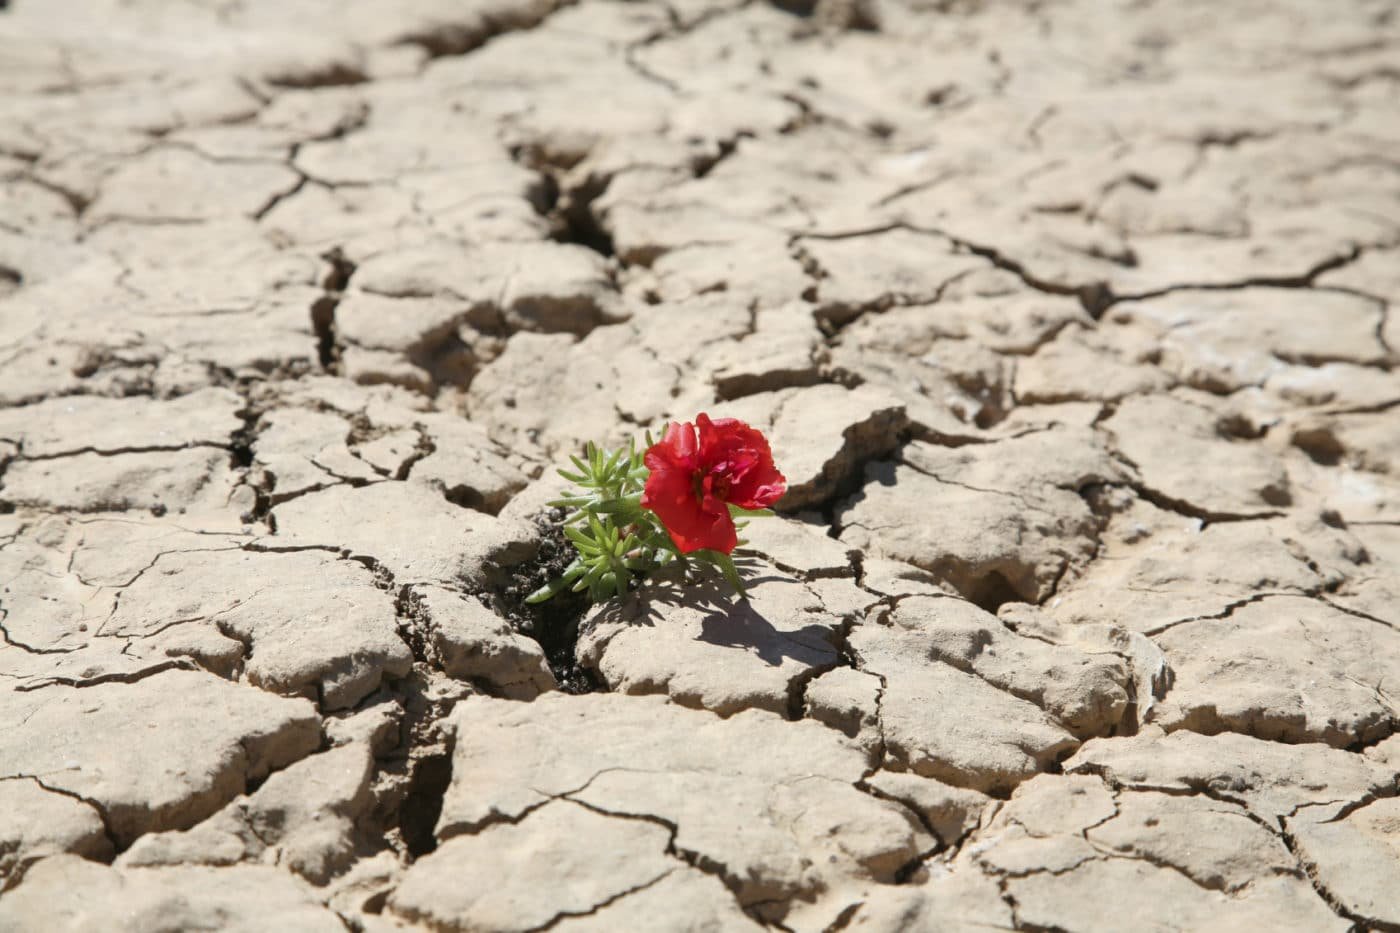 Цветок среди камней. Одинокий цветок на скале. Цветок в пустыне. Цветущая пустыня. Трещин цветок